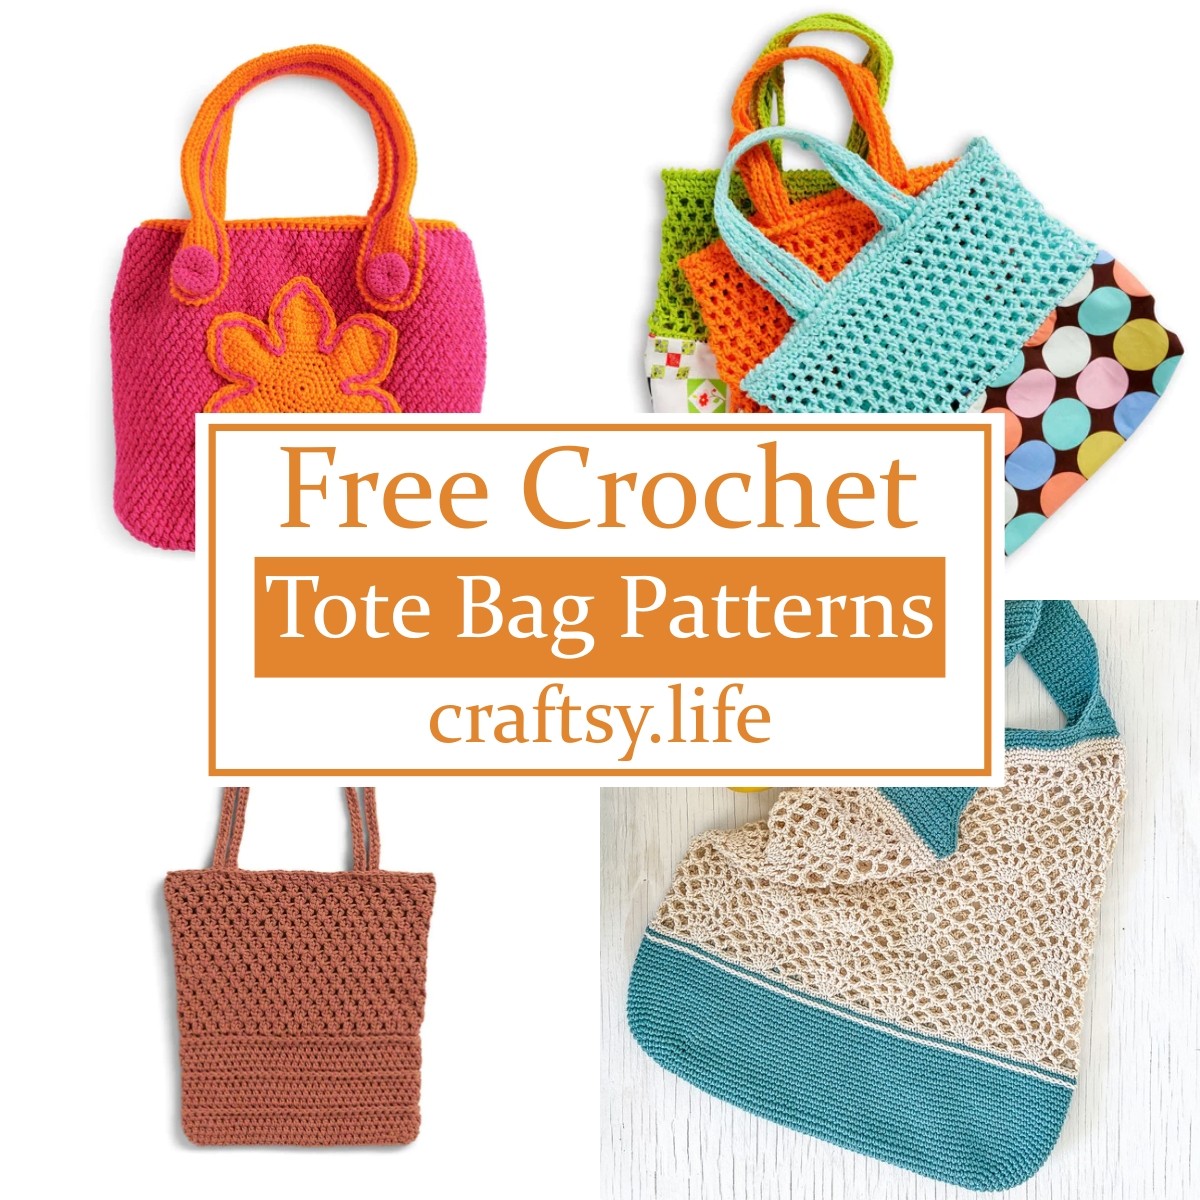 5 Free Crochet Tote Bag Patterns